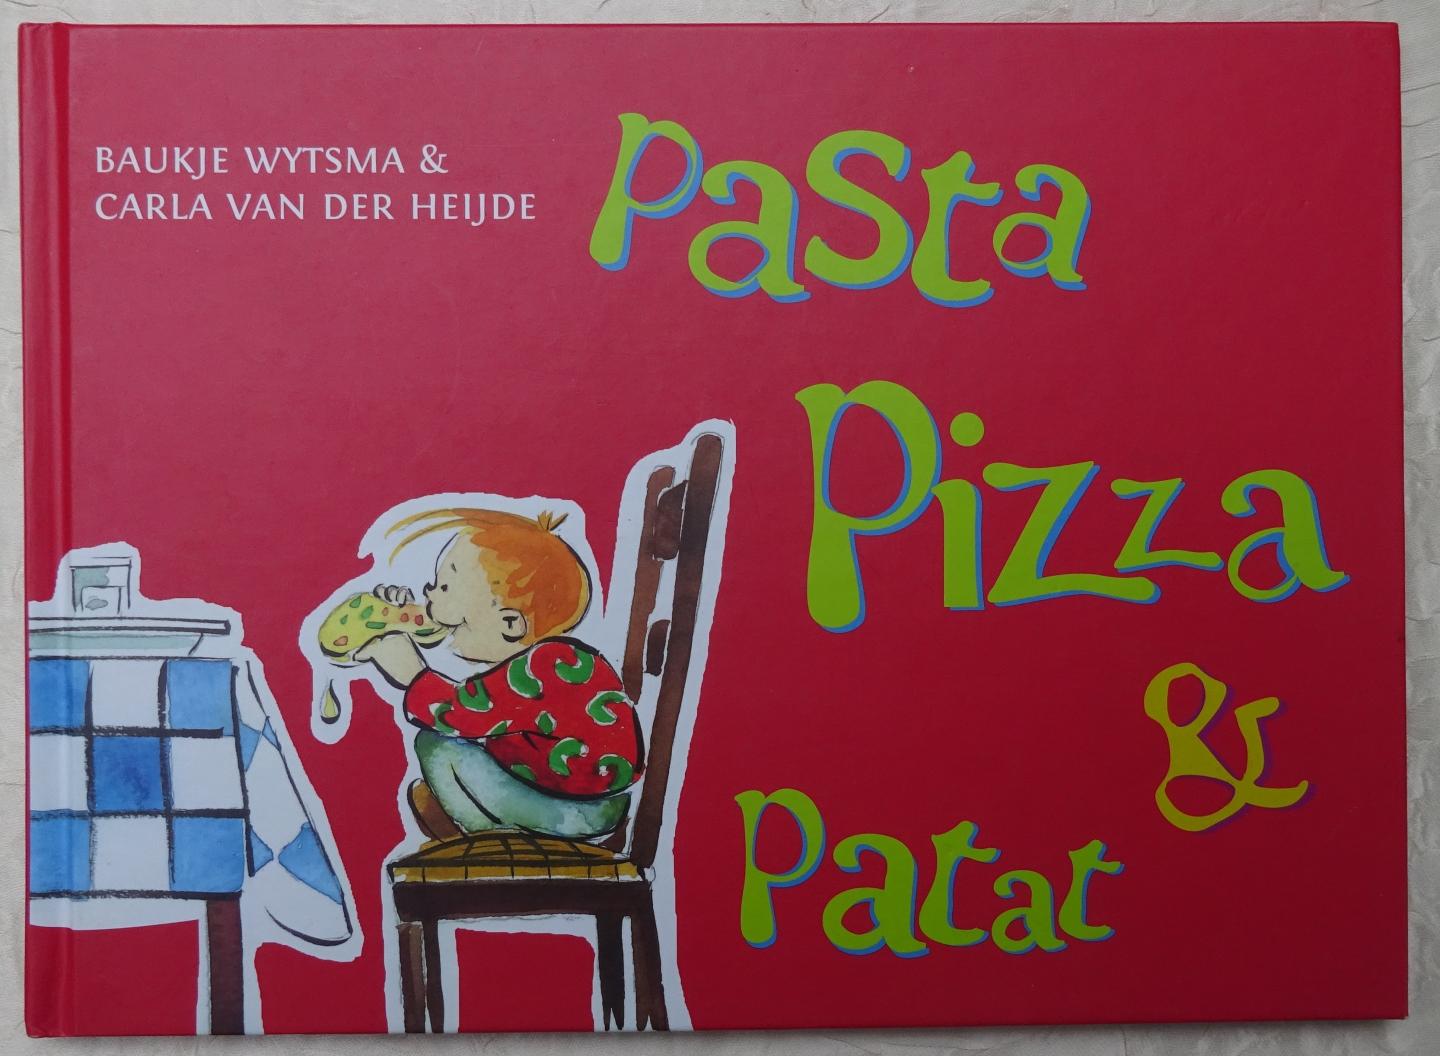 Wytsma, Baukje / Carla van der Heijde (yllustraasjes) - Pasta, Pizza & Patat [ isbn 9789062738120 ]